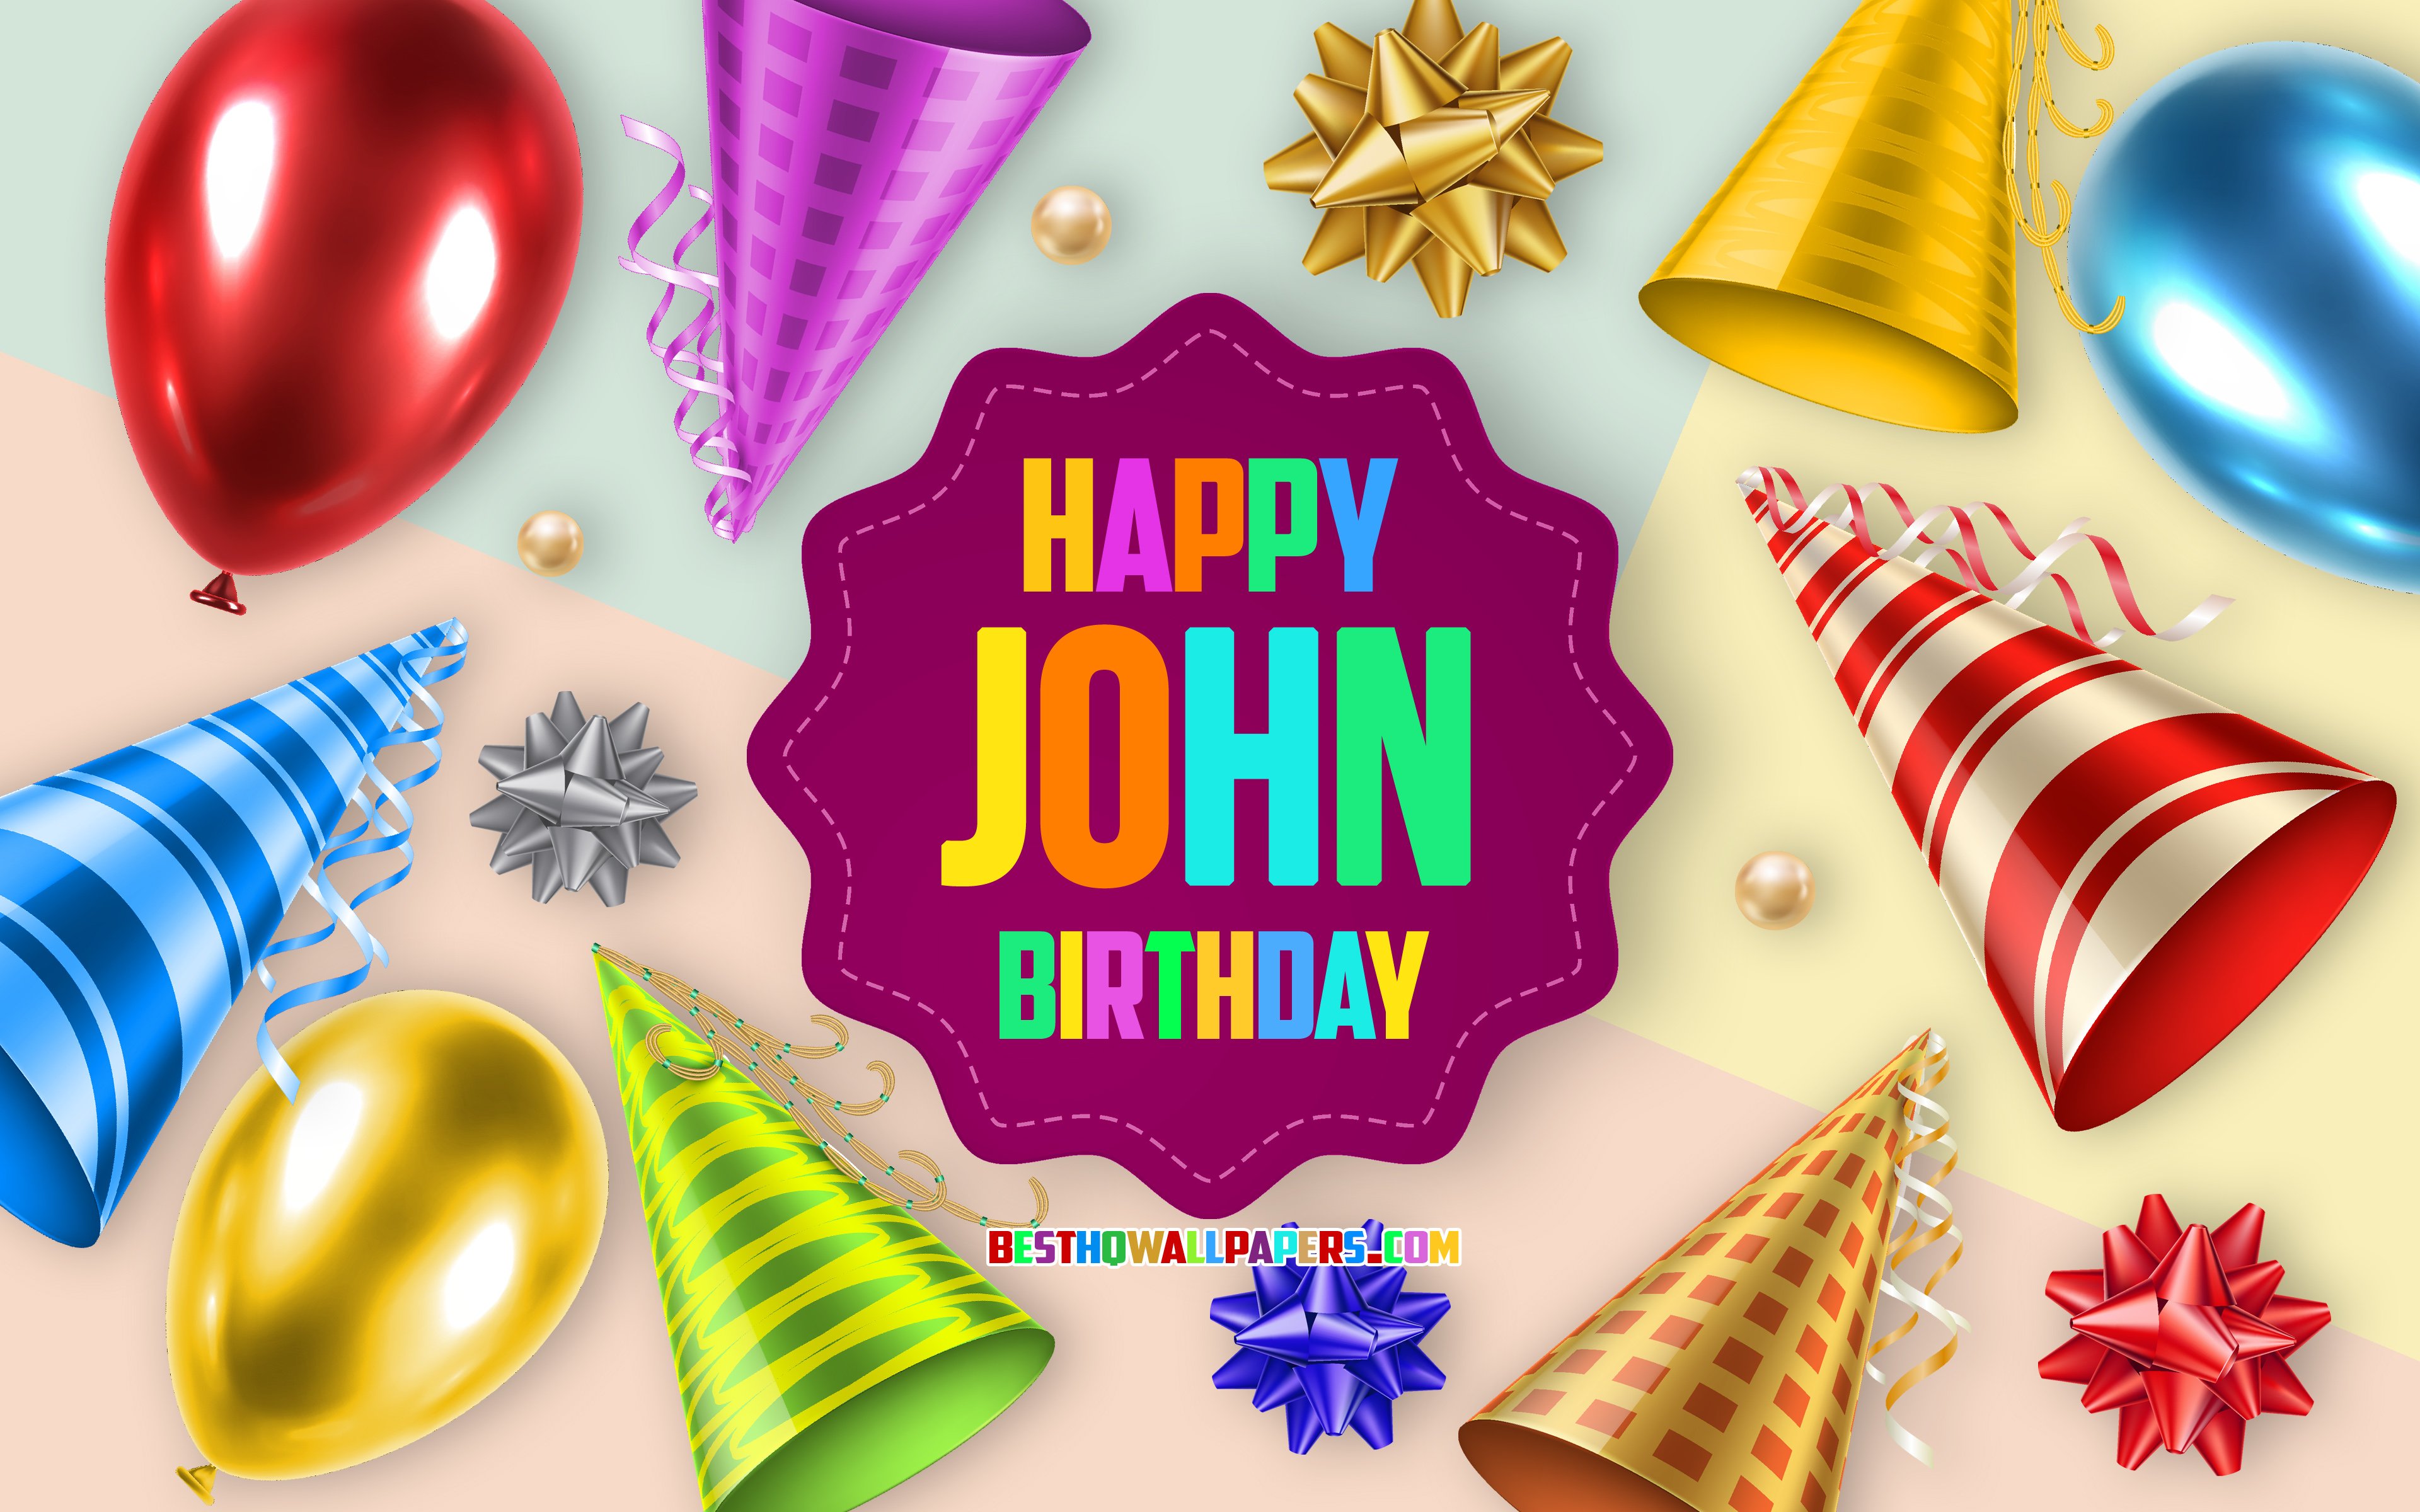 Скачать обои Happy Birthday John, Birthday Balloon Background, John, creative art, Happy John birthday, silk bows, John Birthday, Birthday Party Background для монитора с разрешением 3840x2400. Картинки на рабочий стол